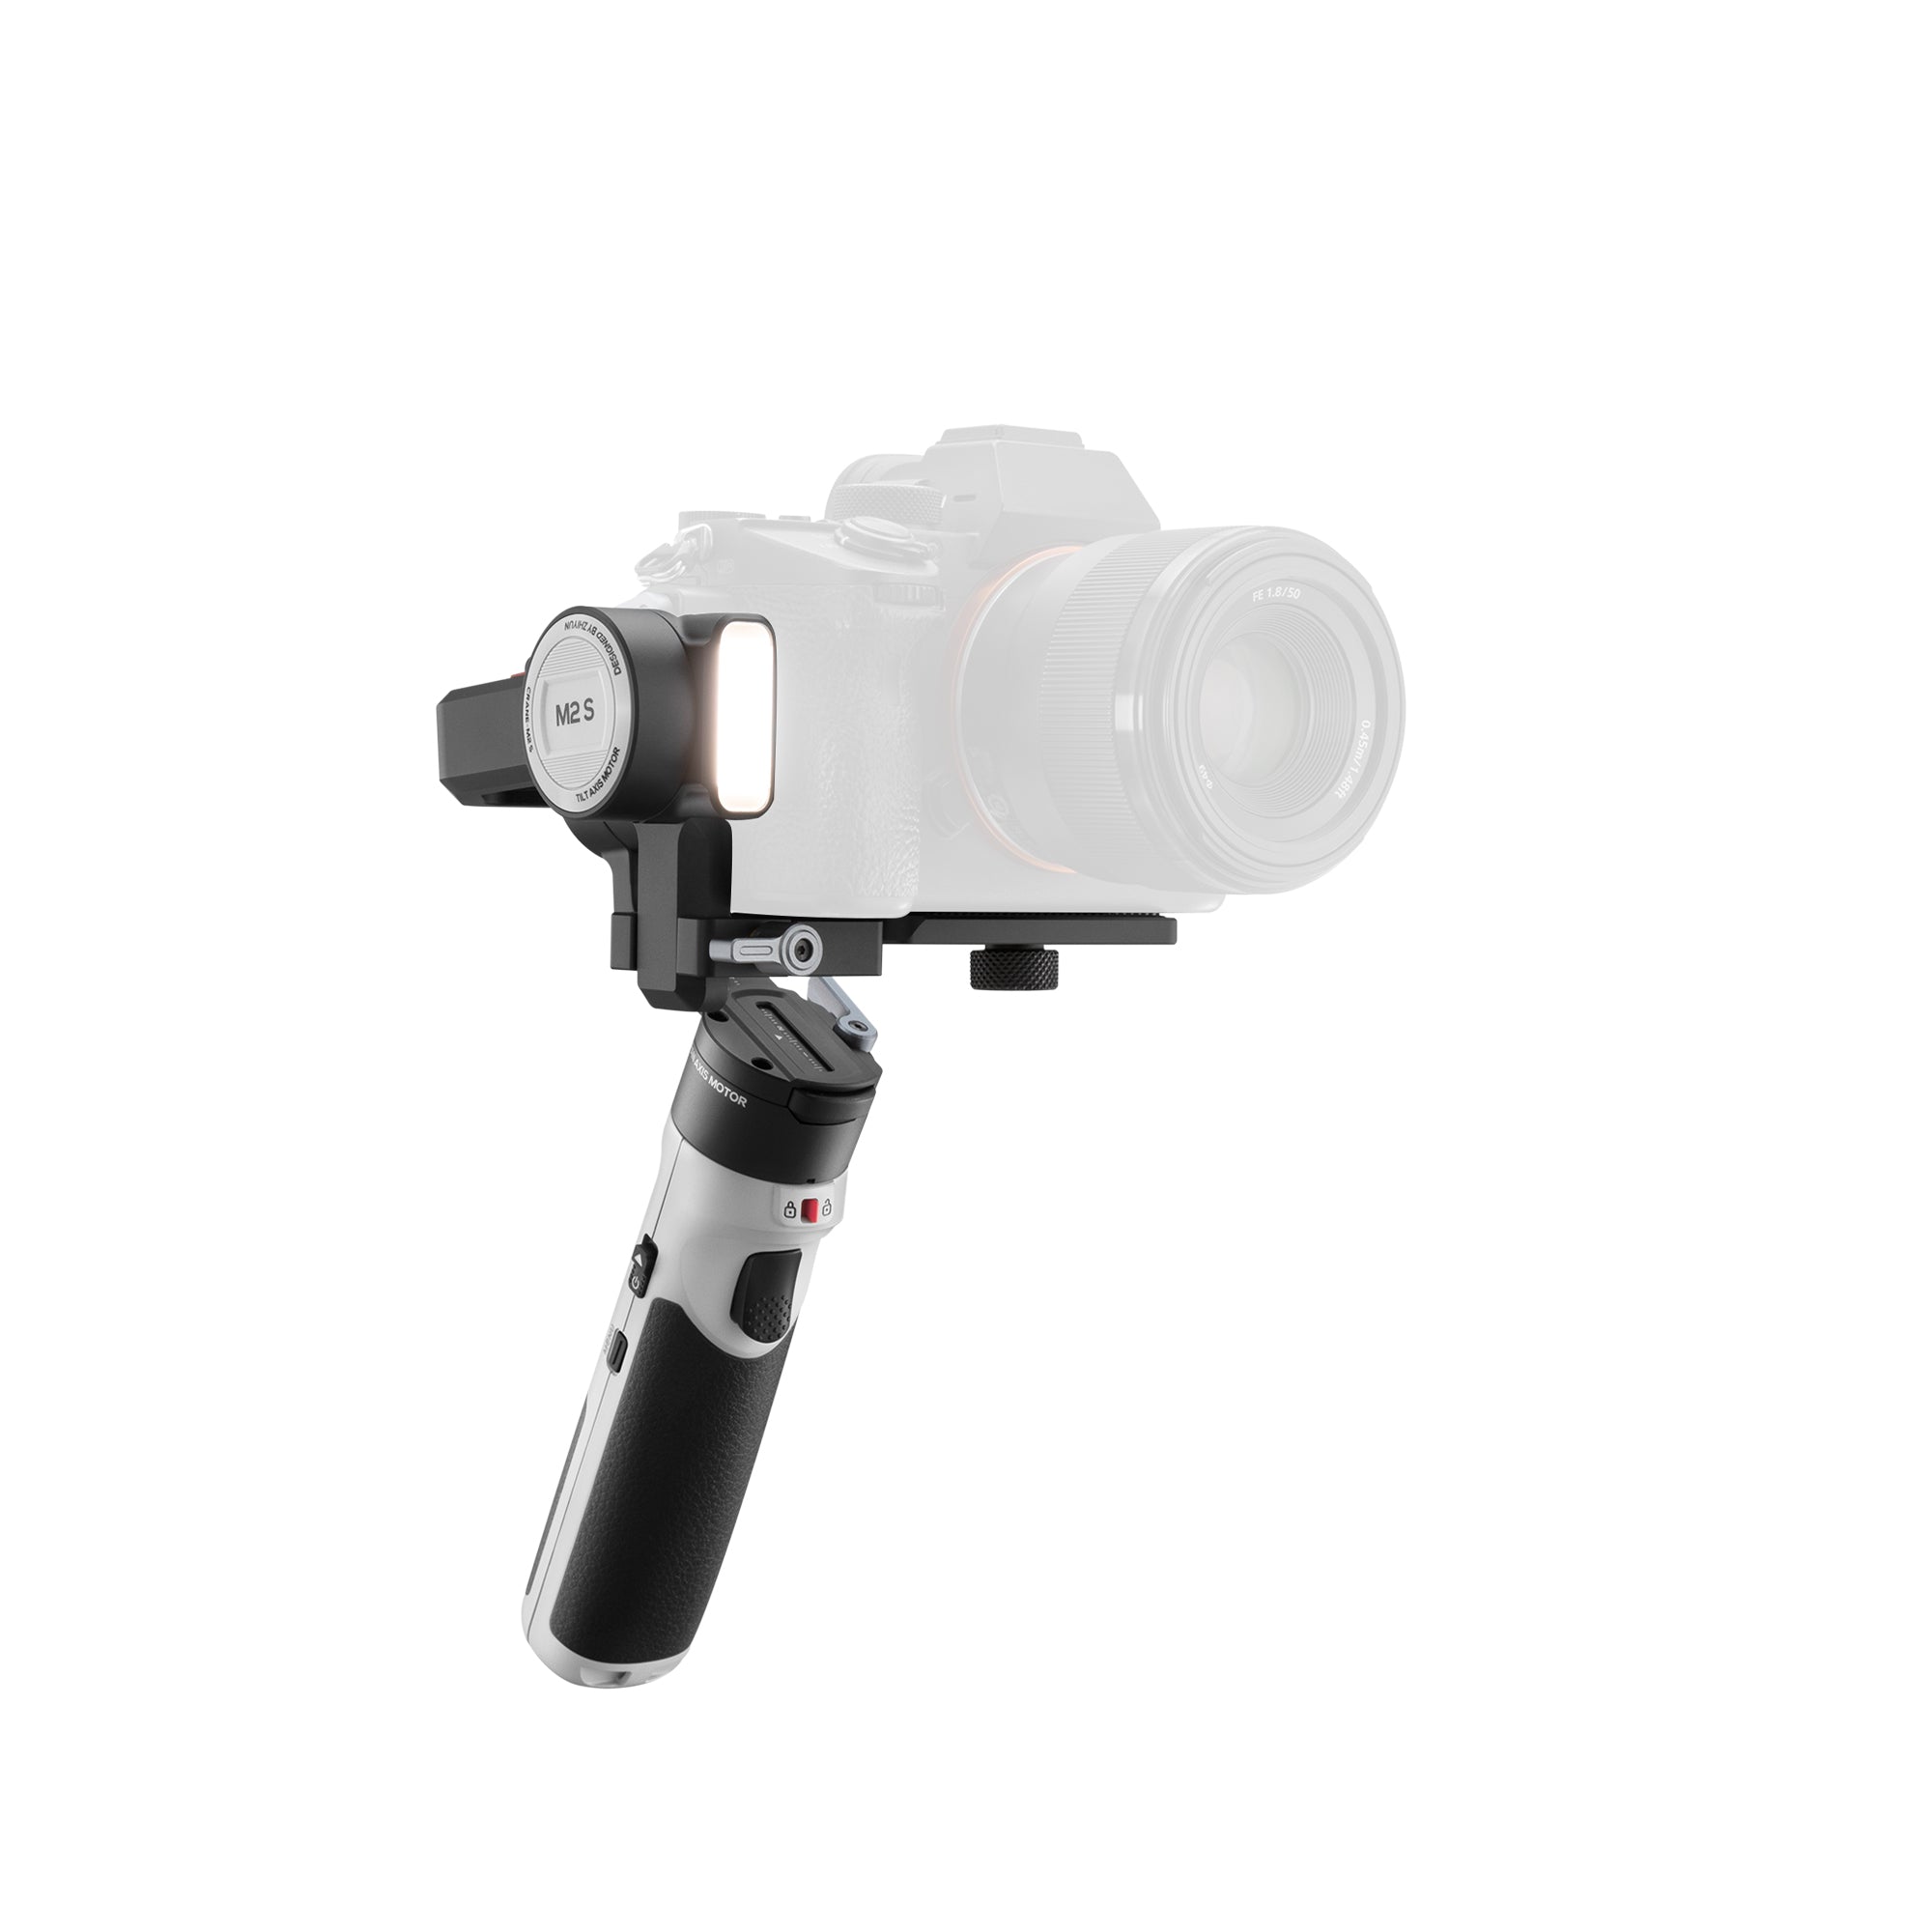 DJI Pocket 2 Handheld Camera Gimbal getting a white-colored